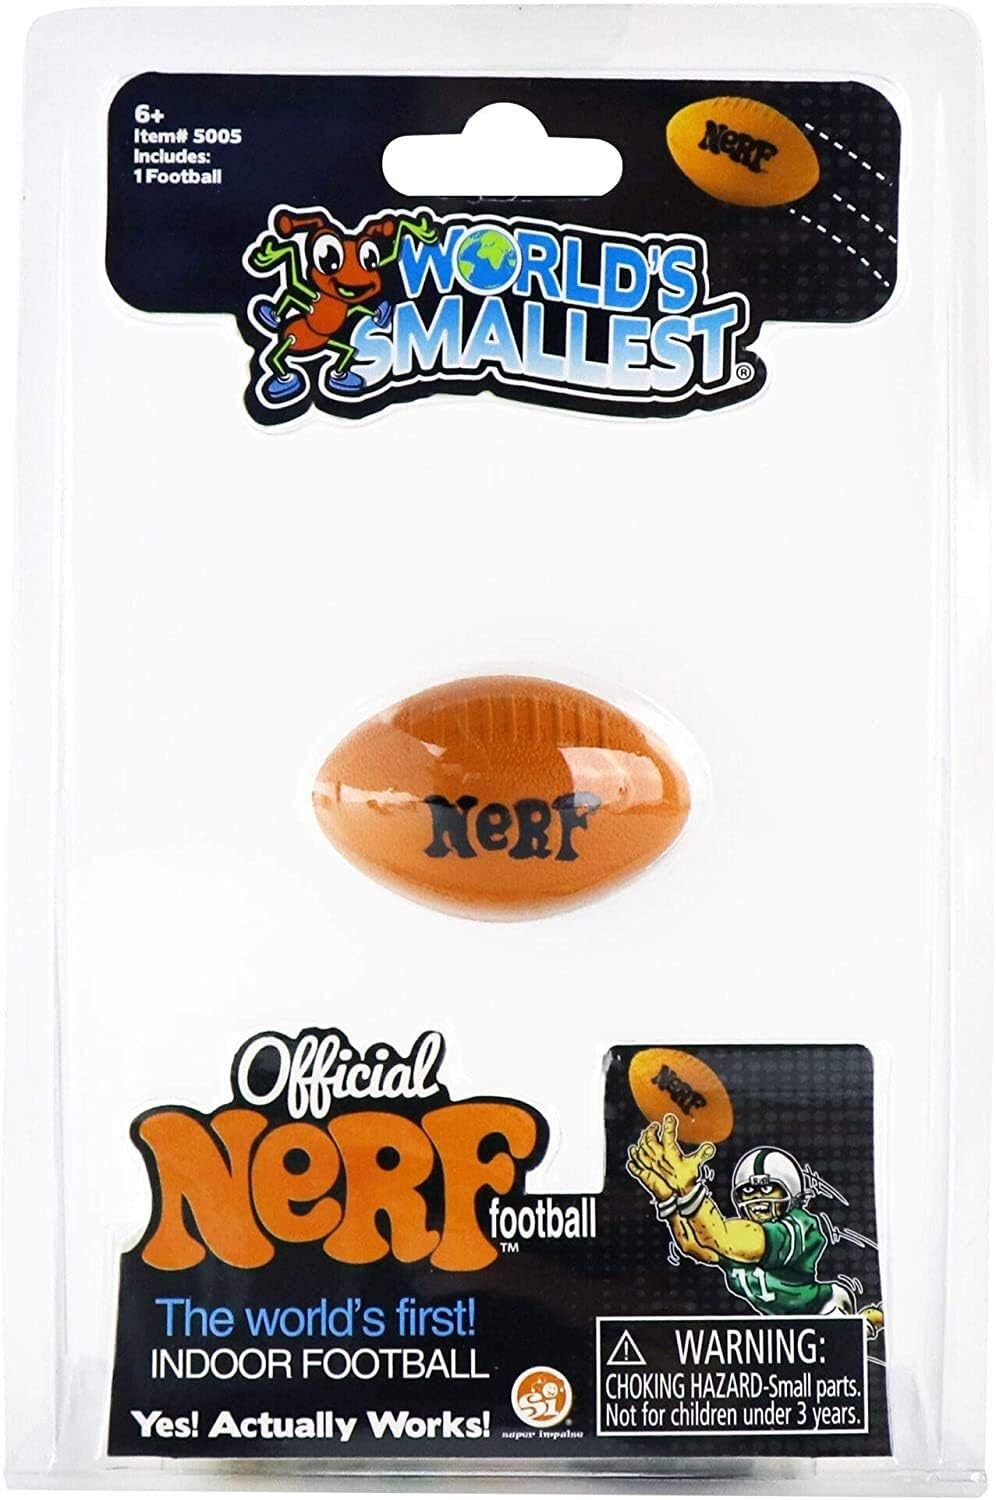 Worlds Smallest Nerf Football